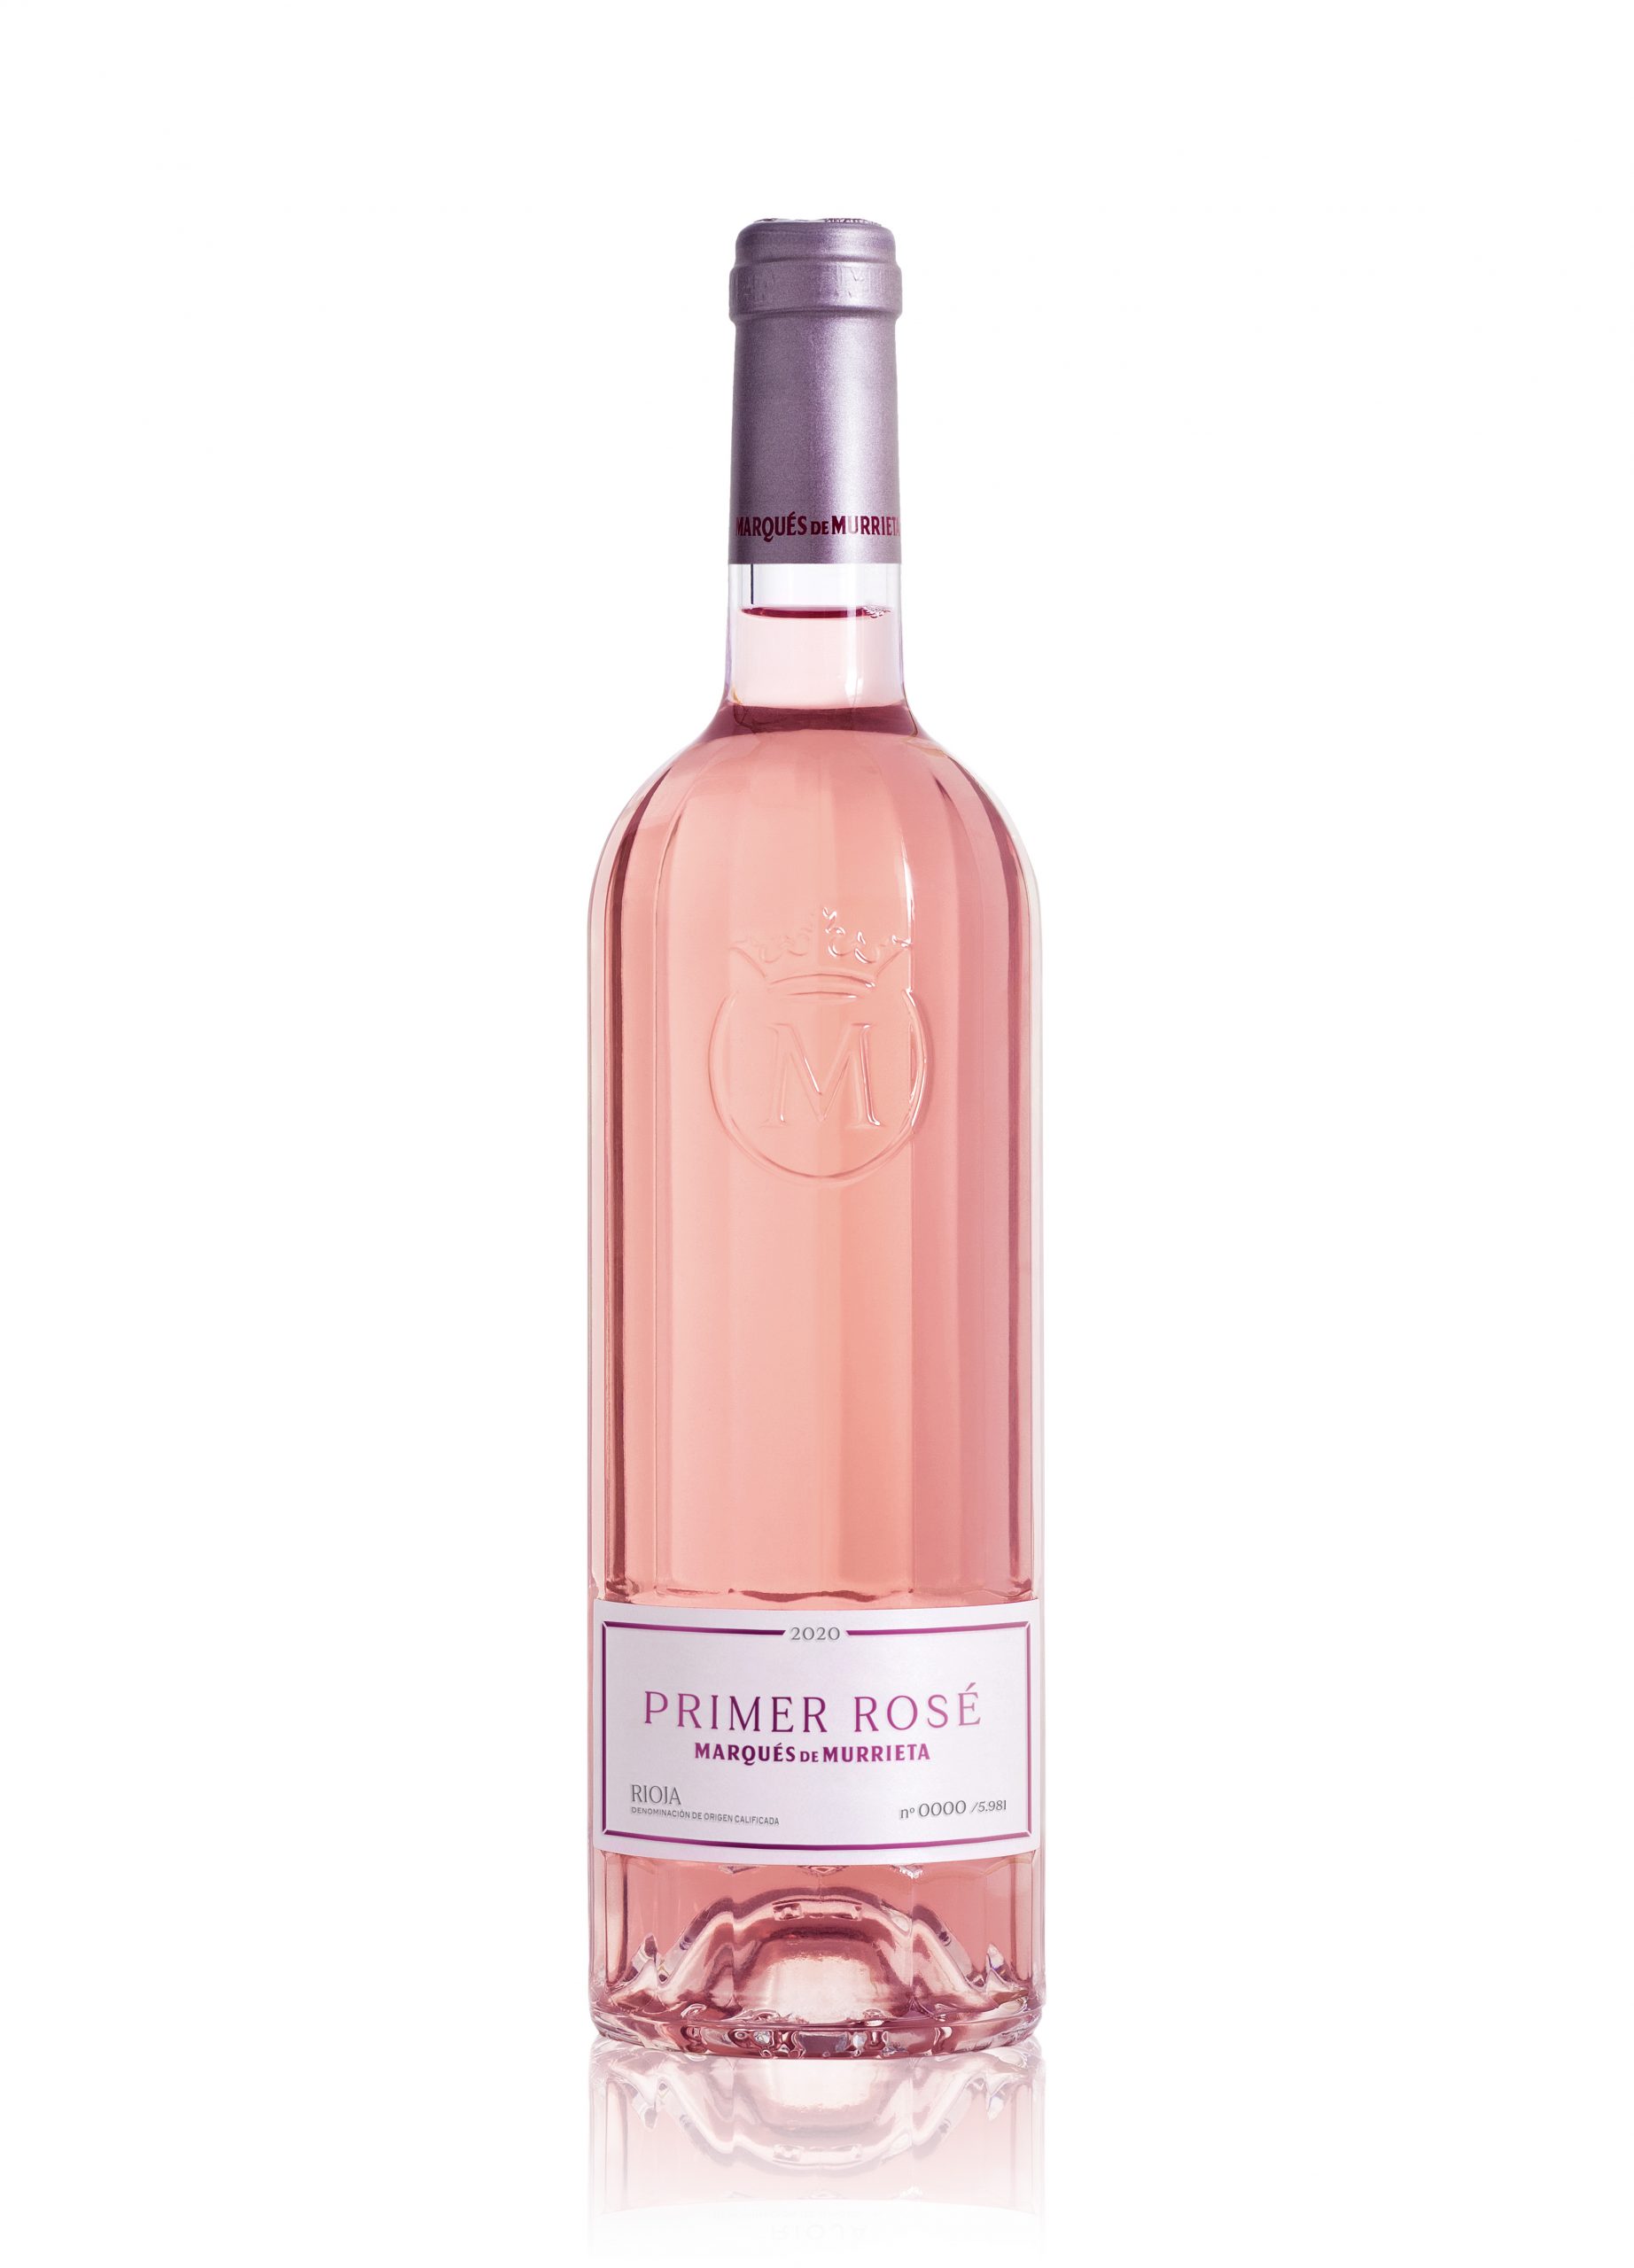 Розовые вина испании. Вино marques de Murrieta primer Rose 2017 0.75 л. Marques Turia вино. Маркиз Муррьета. Вино розовое сухое Испания.